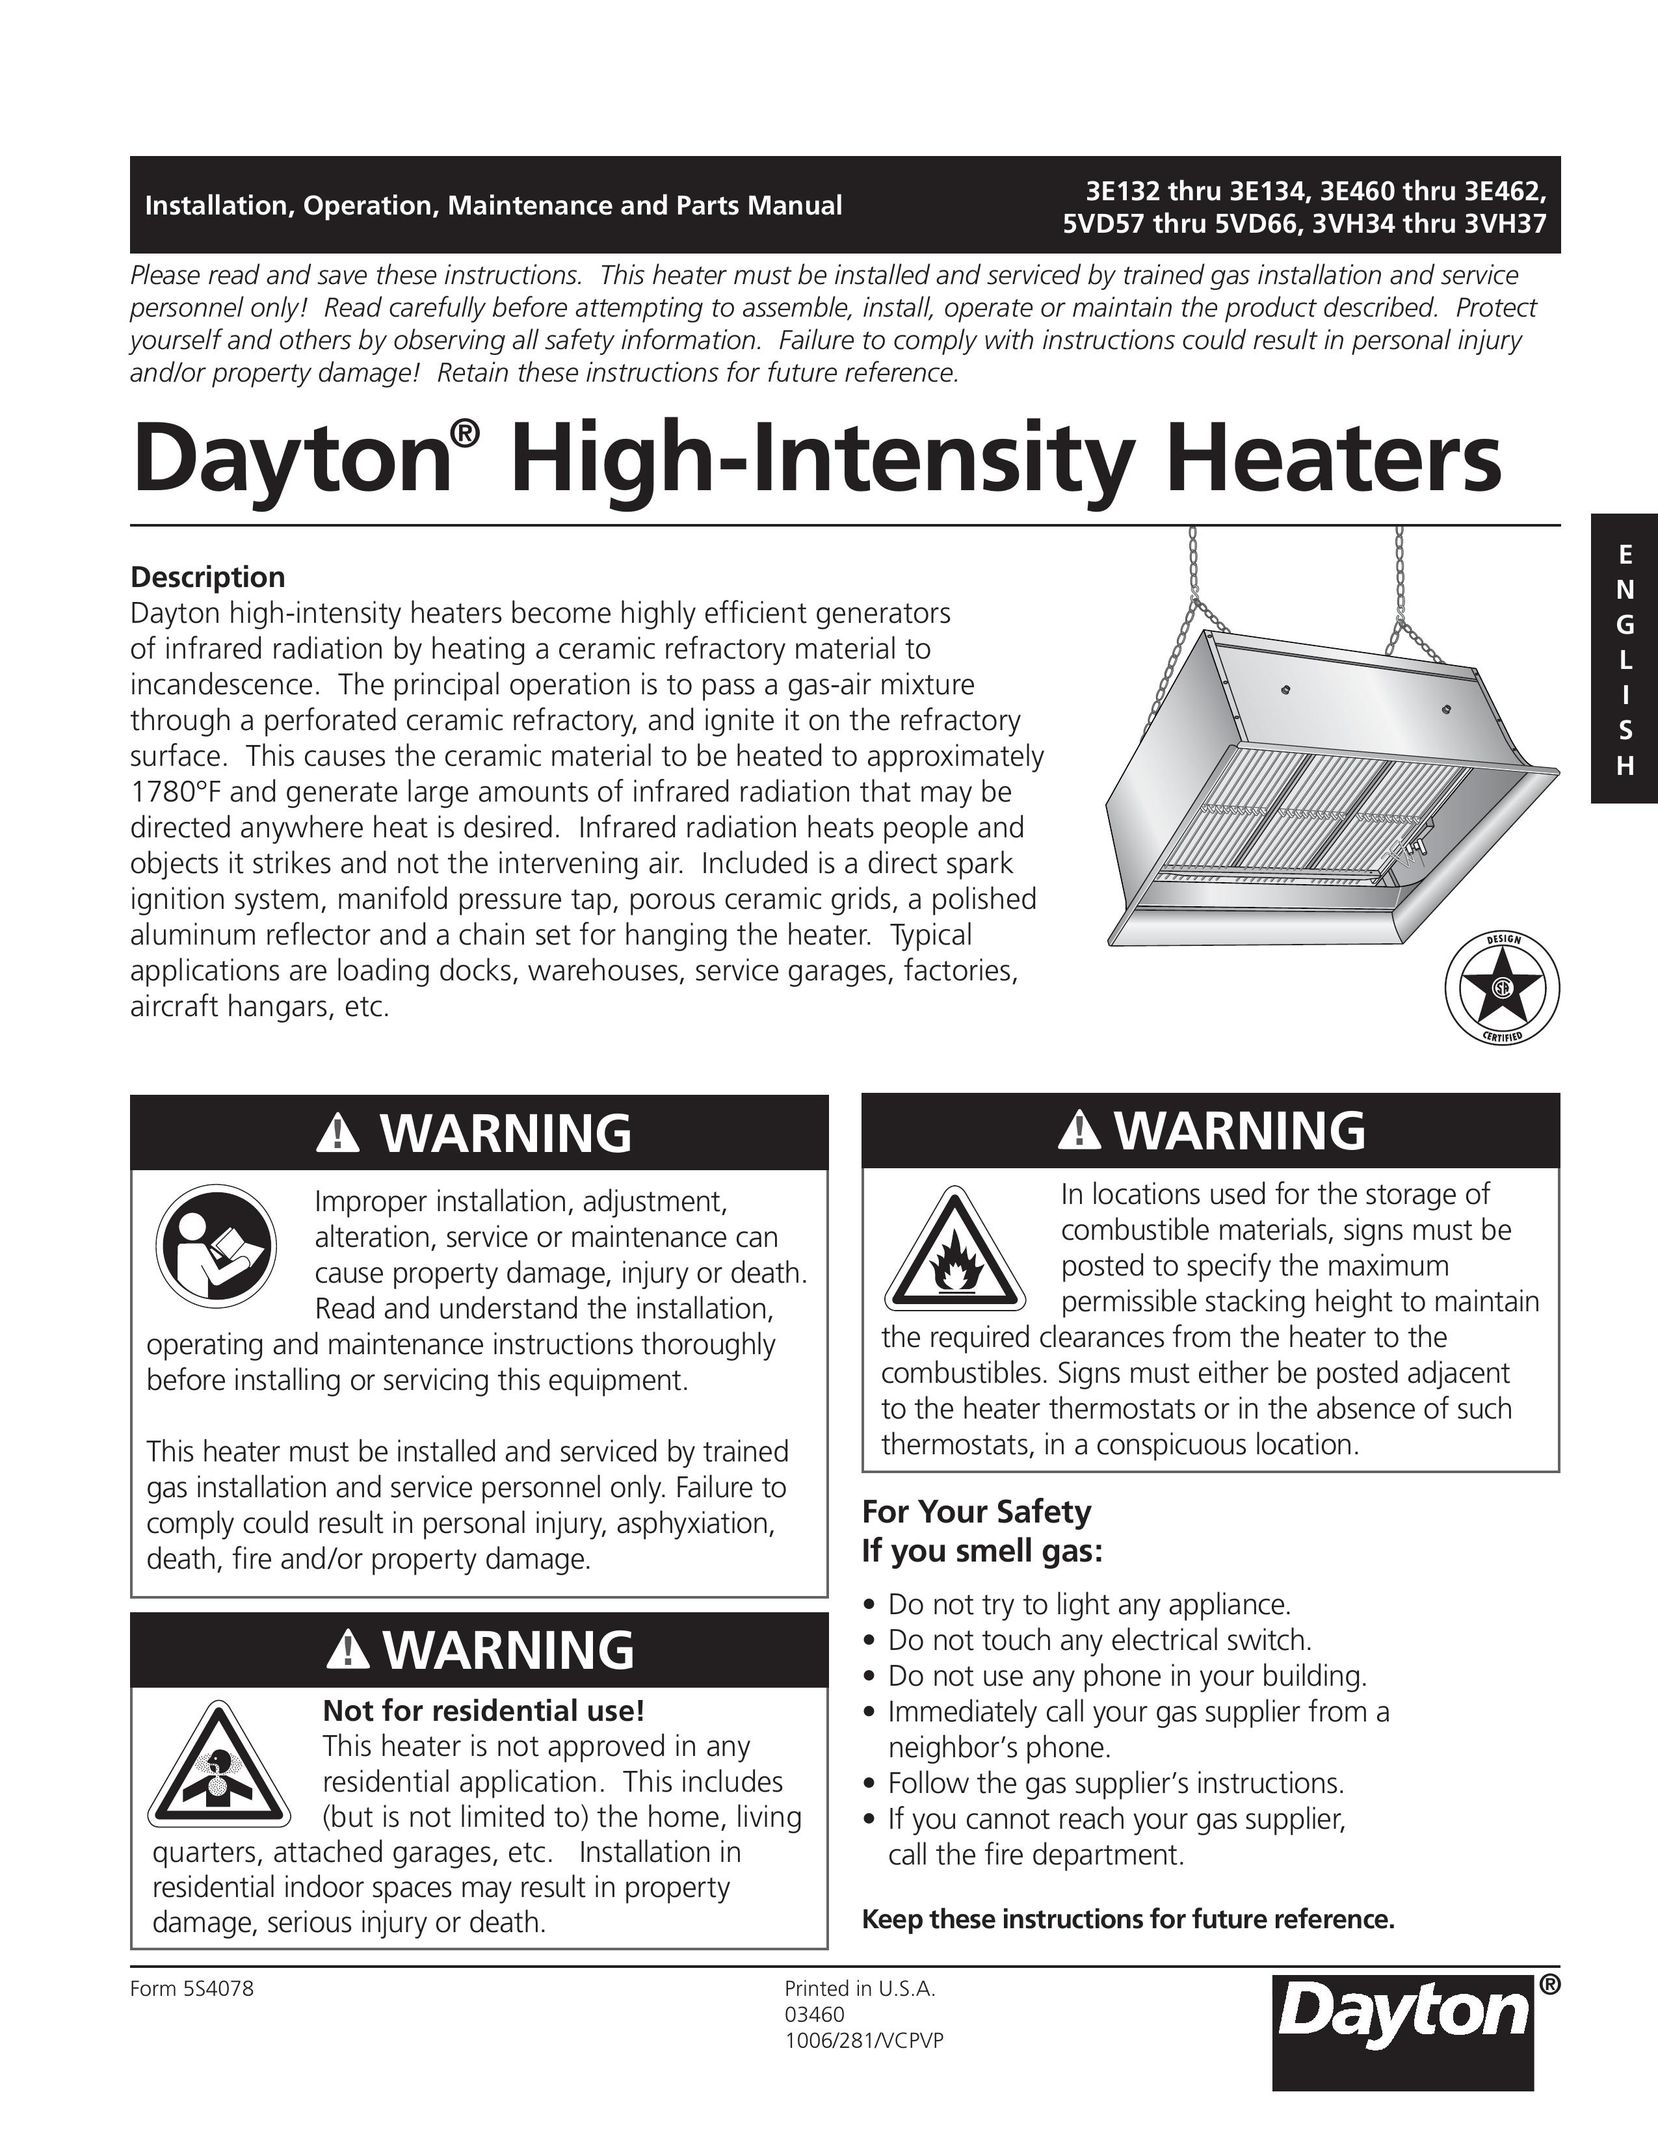 Dayton 3.00E+134 Electric Heater User Manual